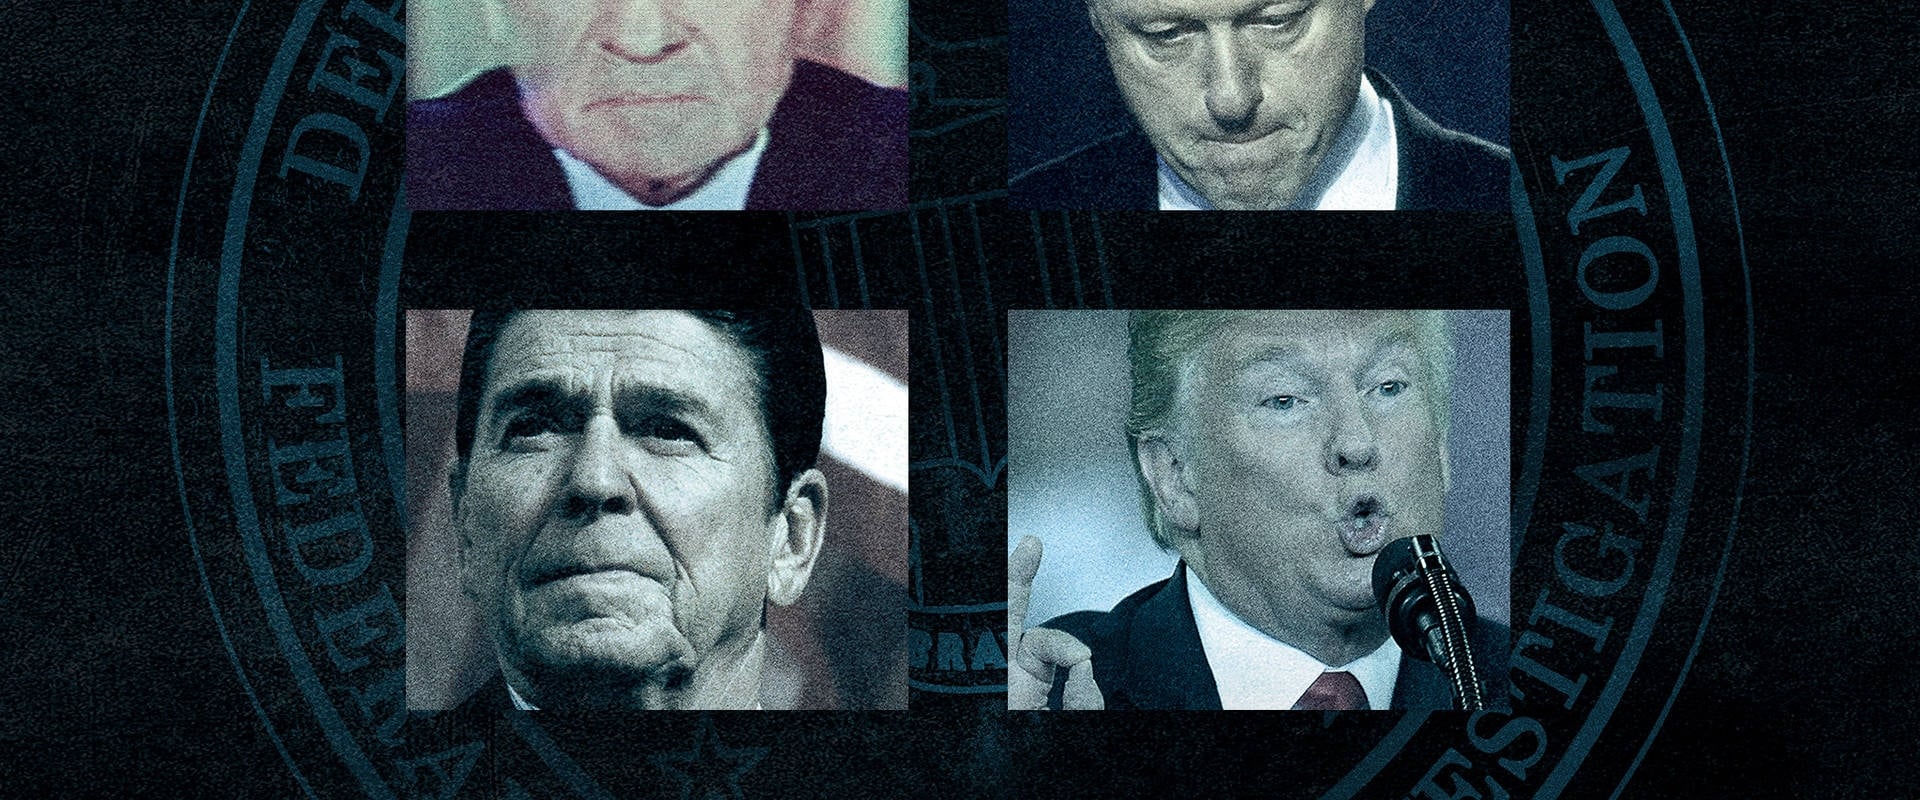 Enemies: The President, Justice & the FBI